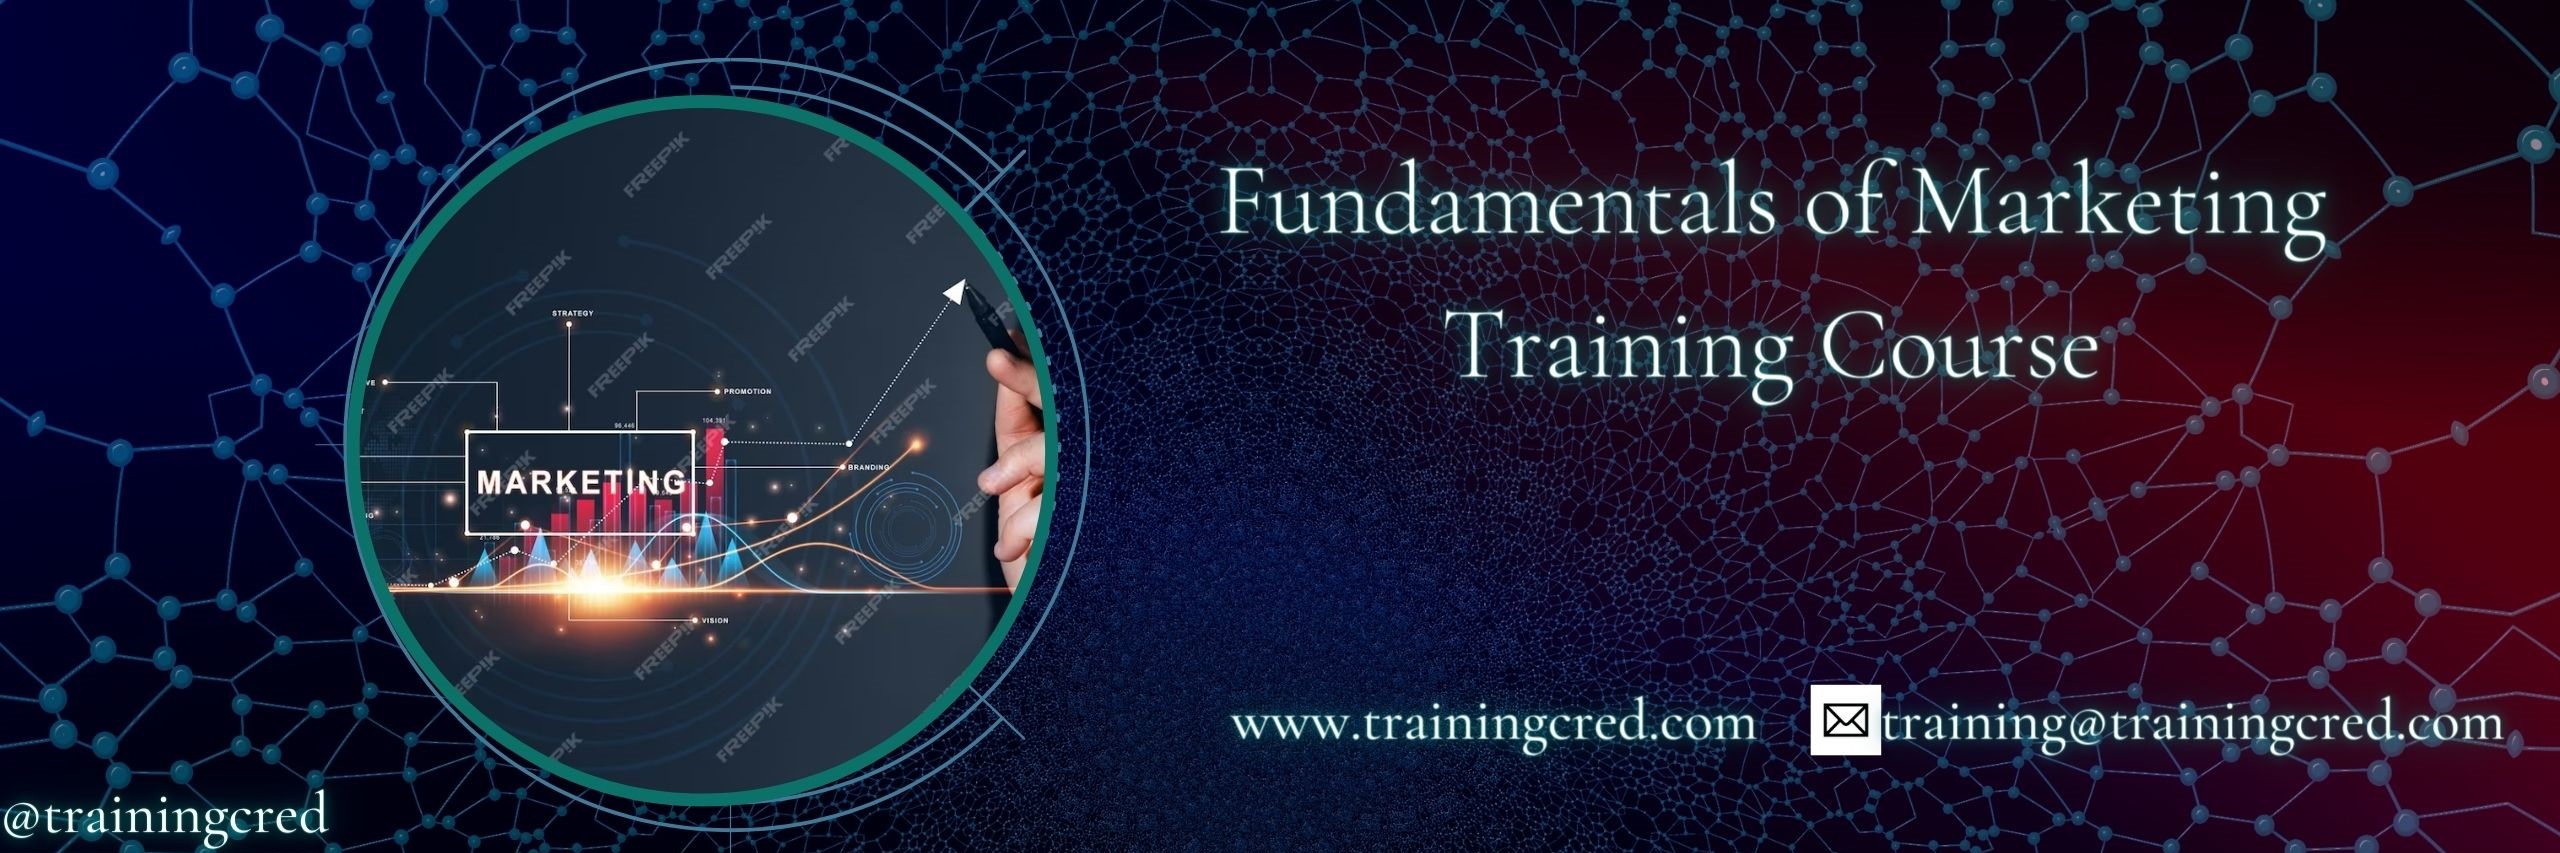 Fundamentals of Marketing Training